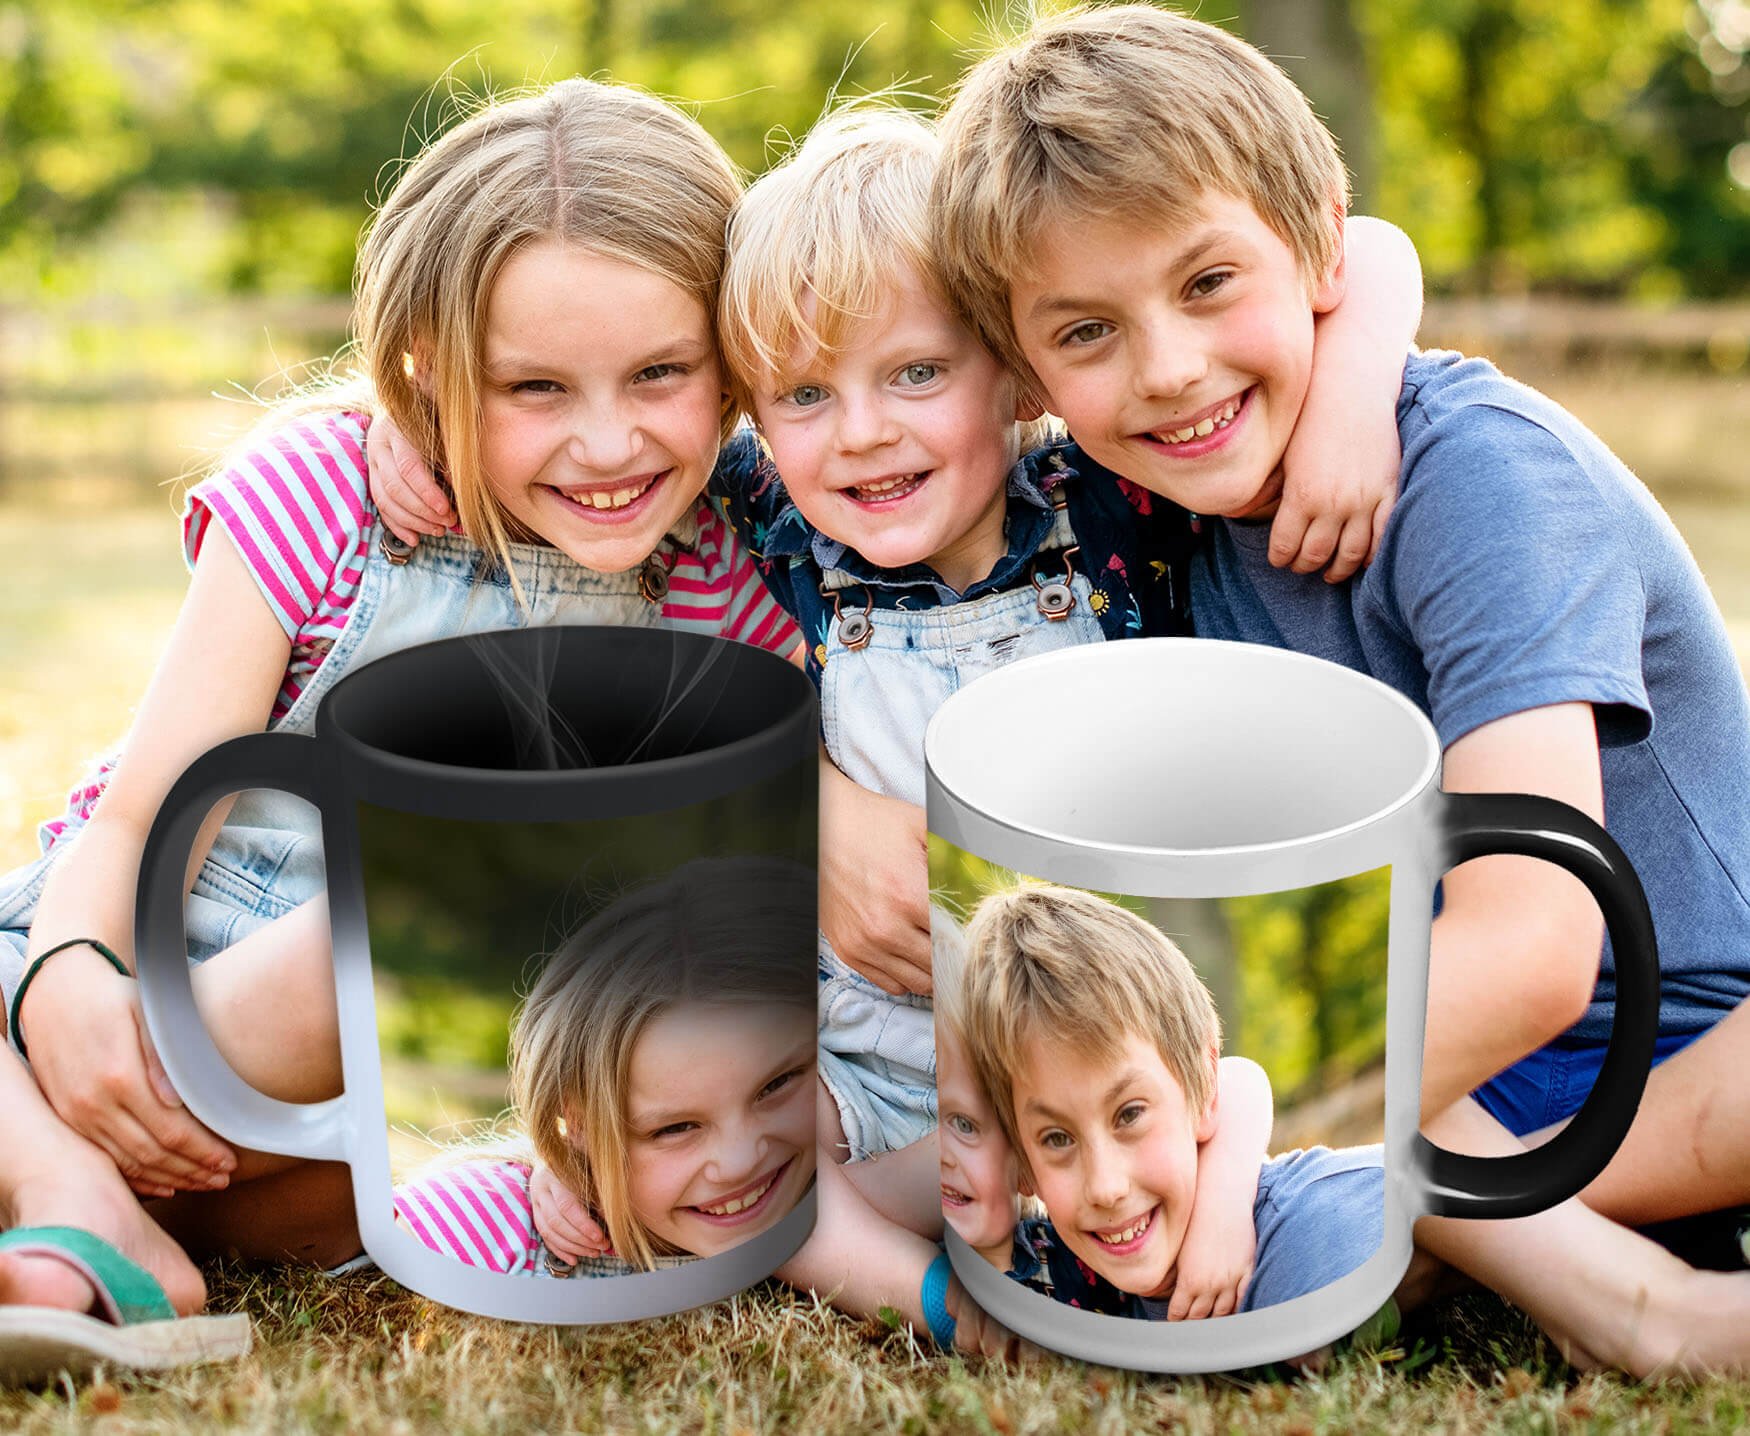 Colour-changing-ceramic-mug-personalised-2-mugs-3-kids-in-park-bgnd-LP1750x1436